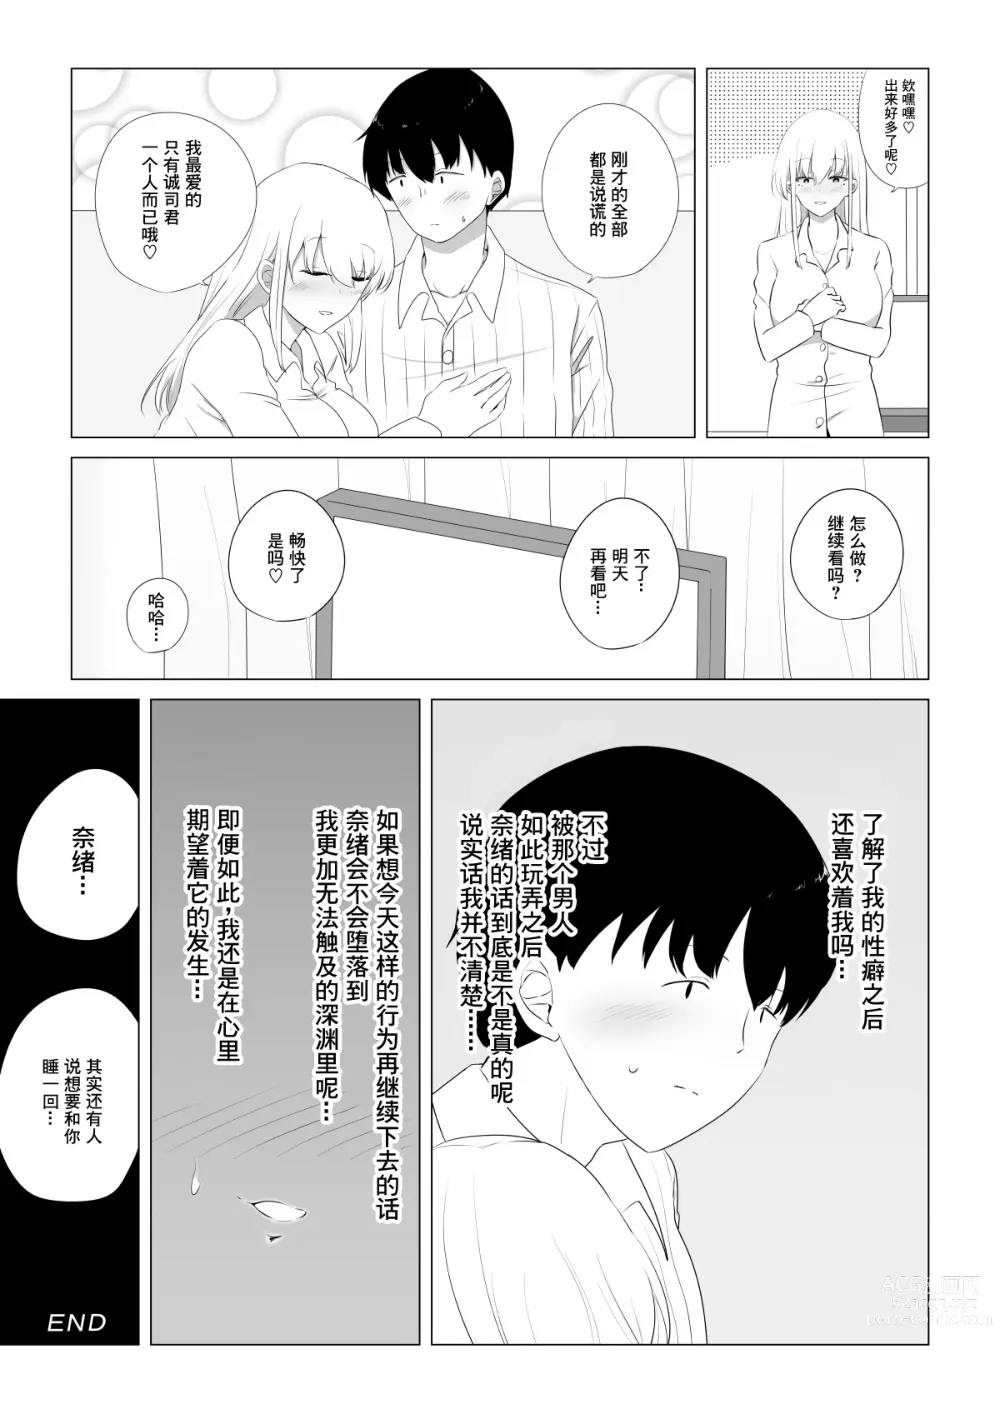 Page 33 of doujinshi 爱妻被绿事件簿